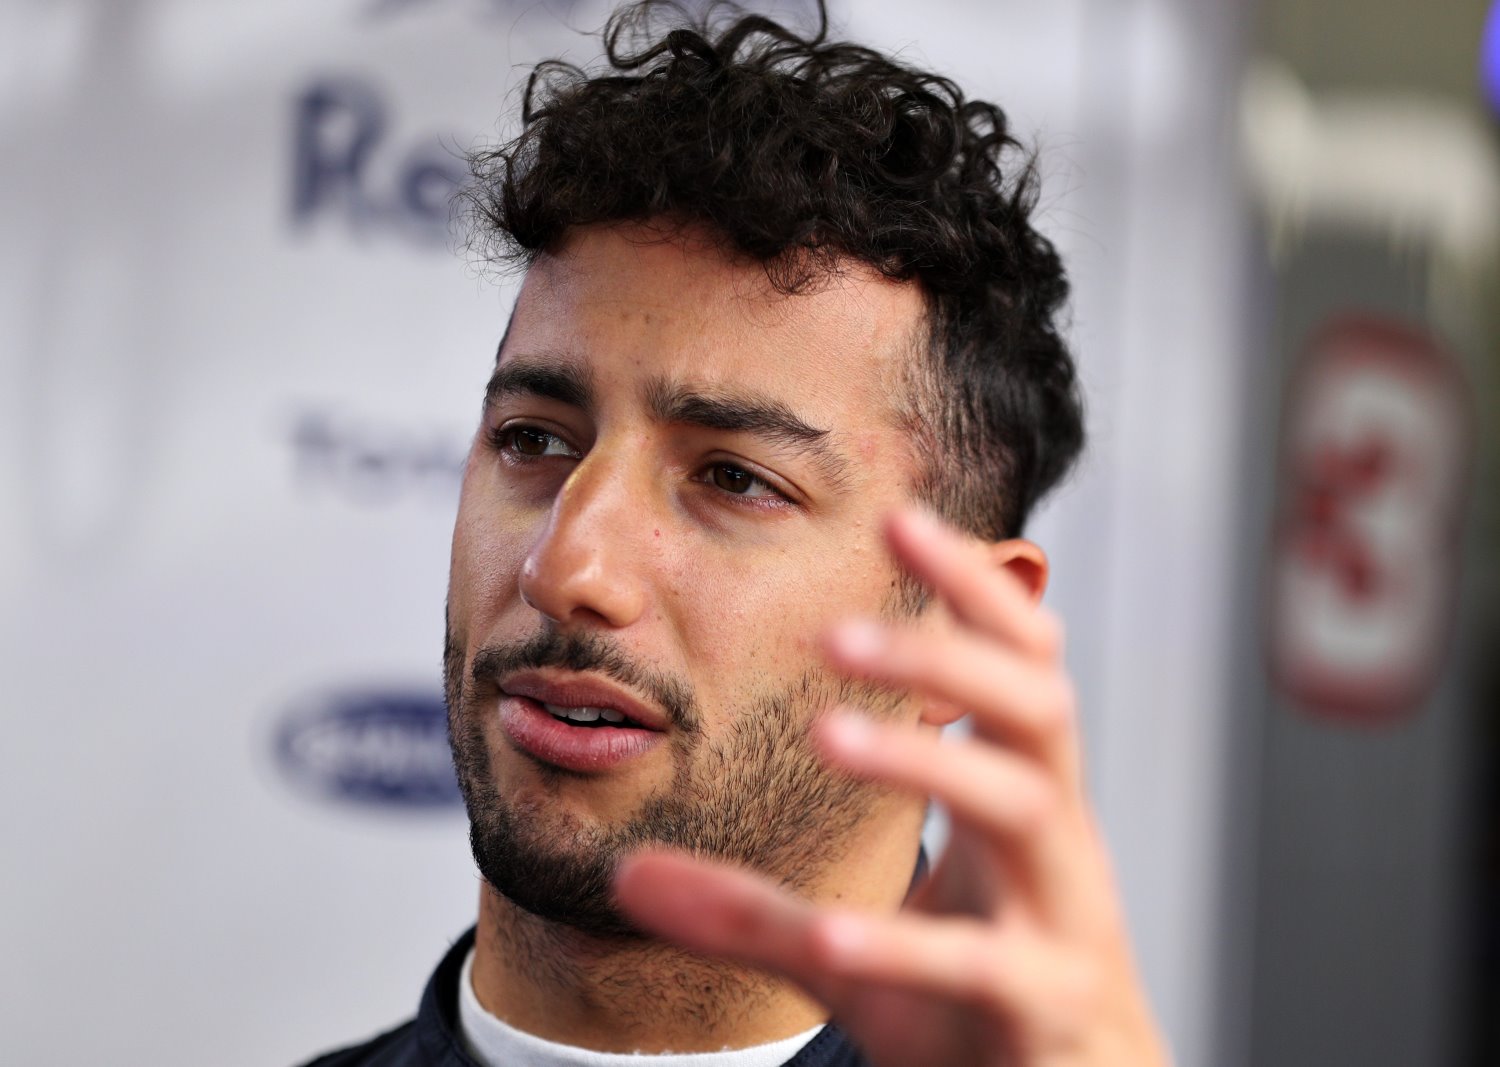 Ricciardo explains how he was shutout by someone at Ferrari